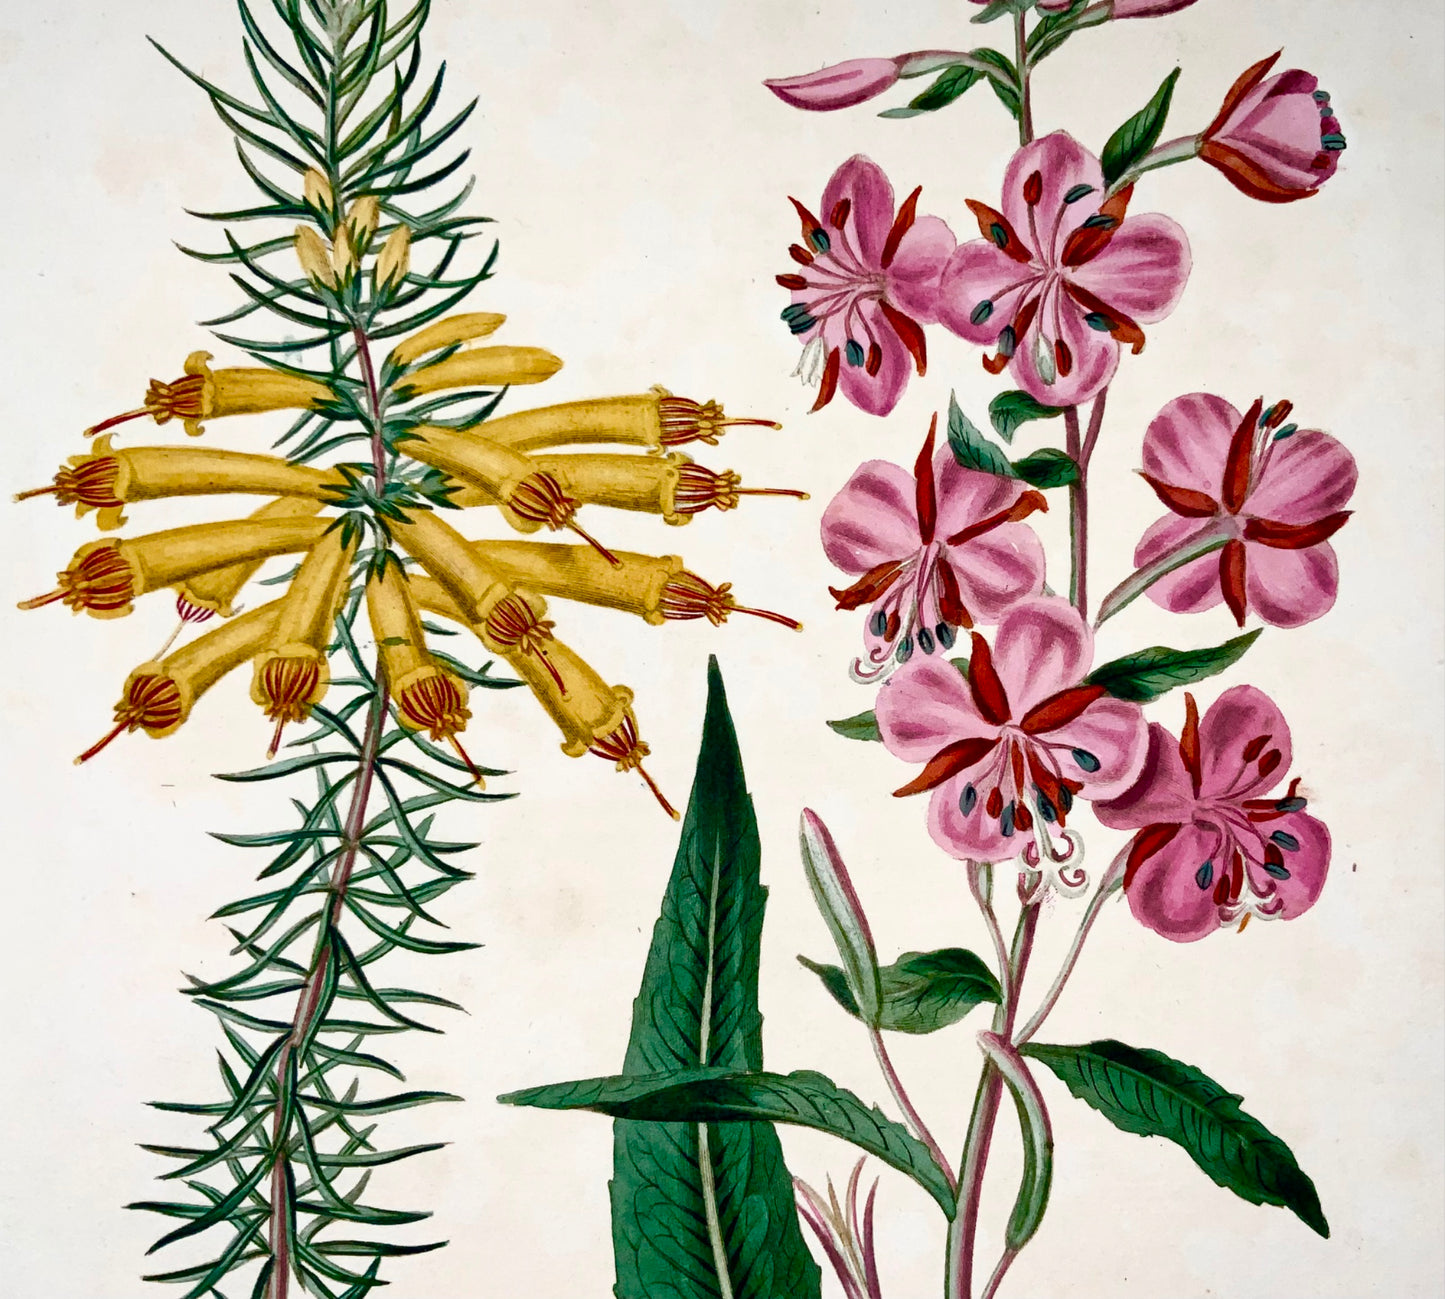 1805 Erica, Rose bay, rare Syd. Edwards, quarto, Practical Gardening, botany